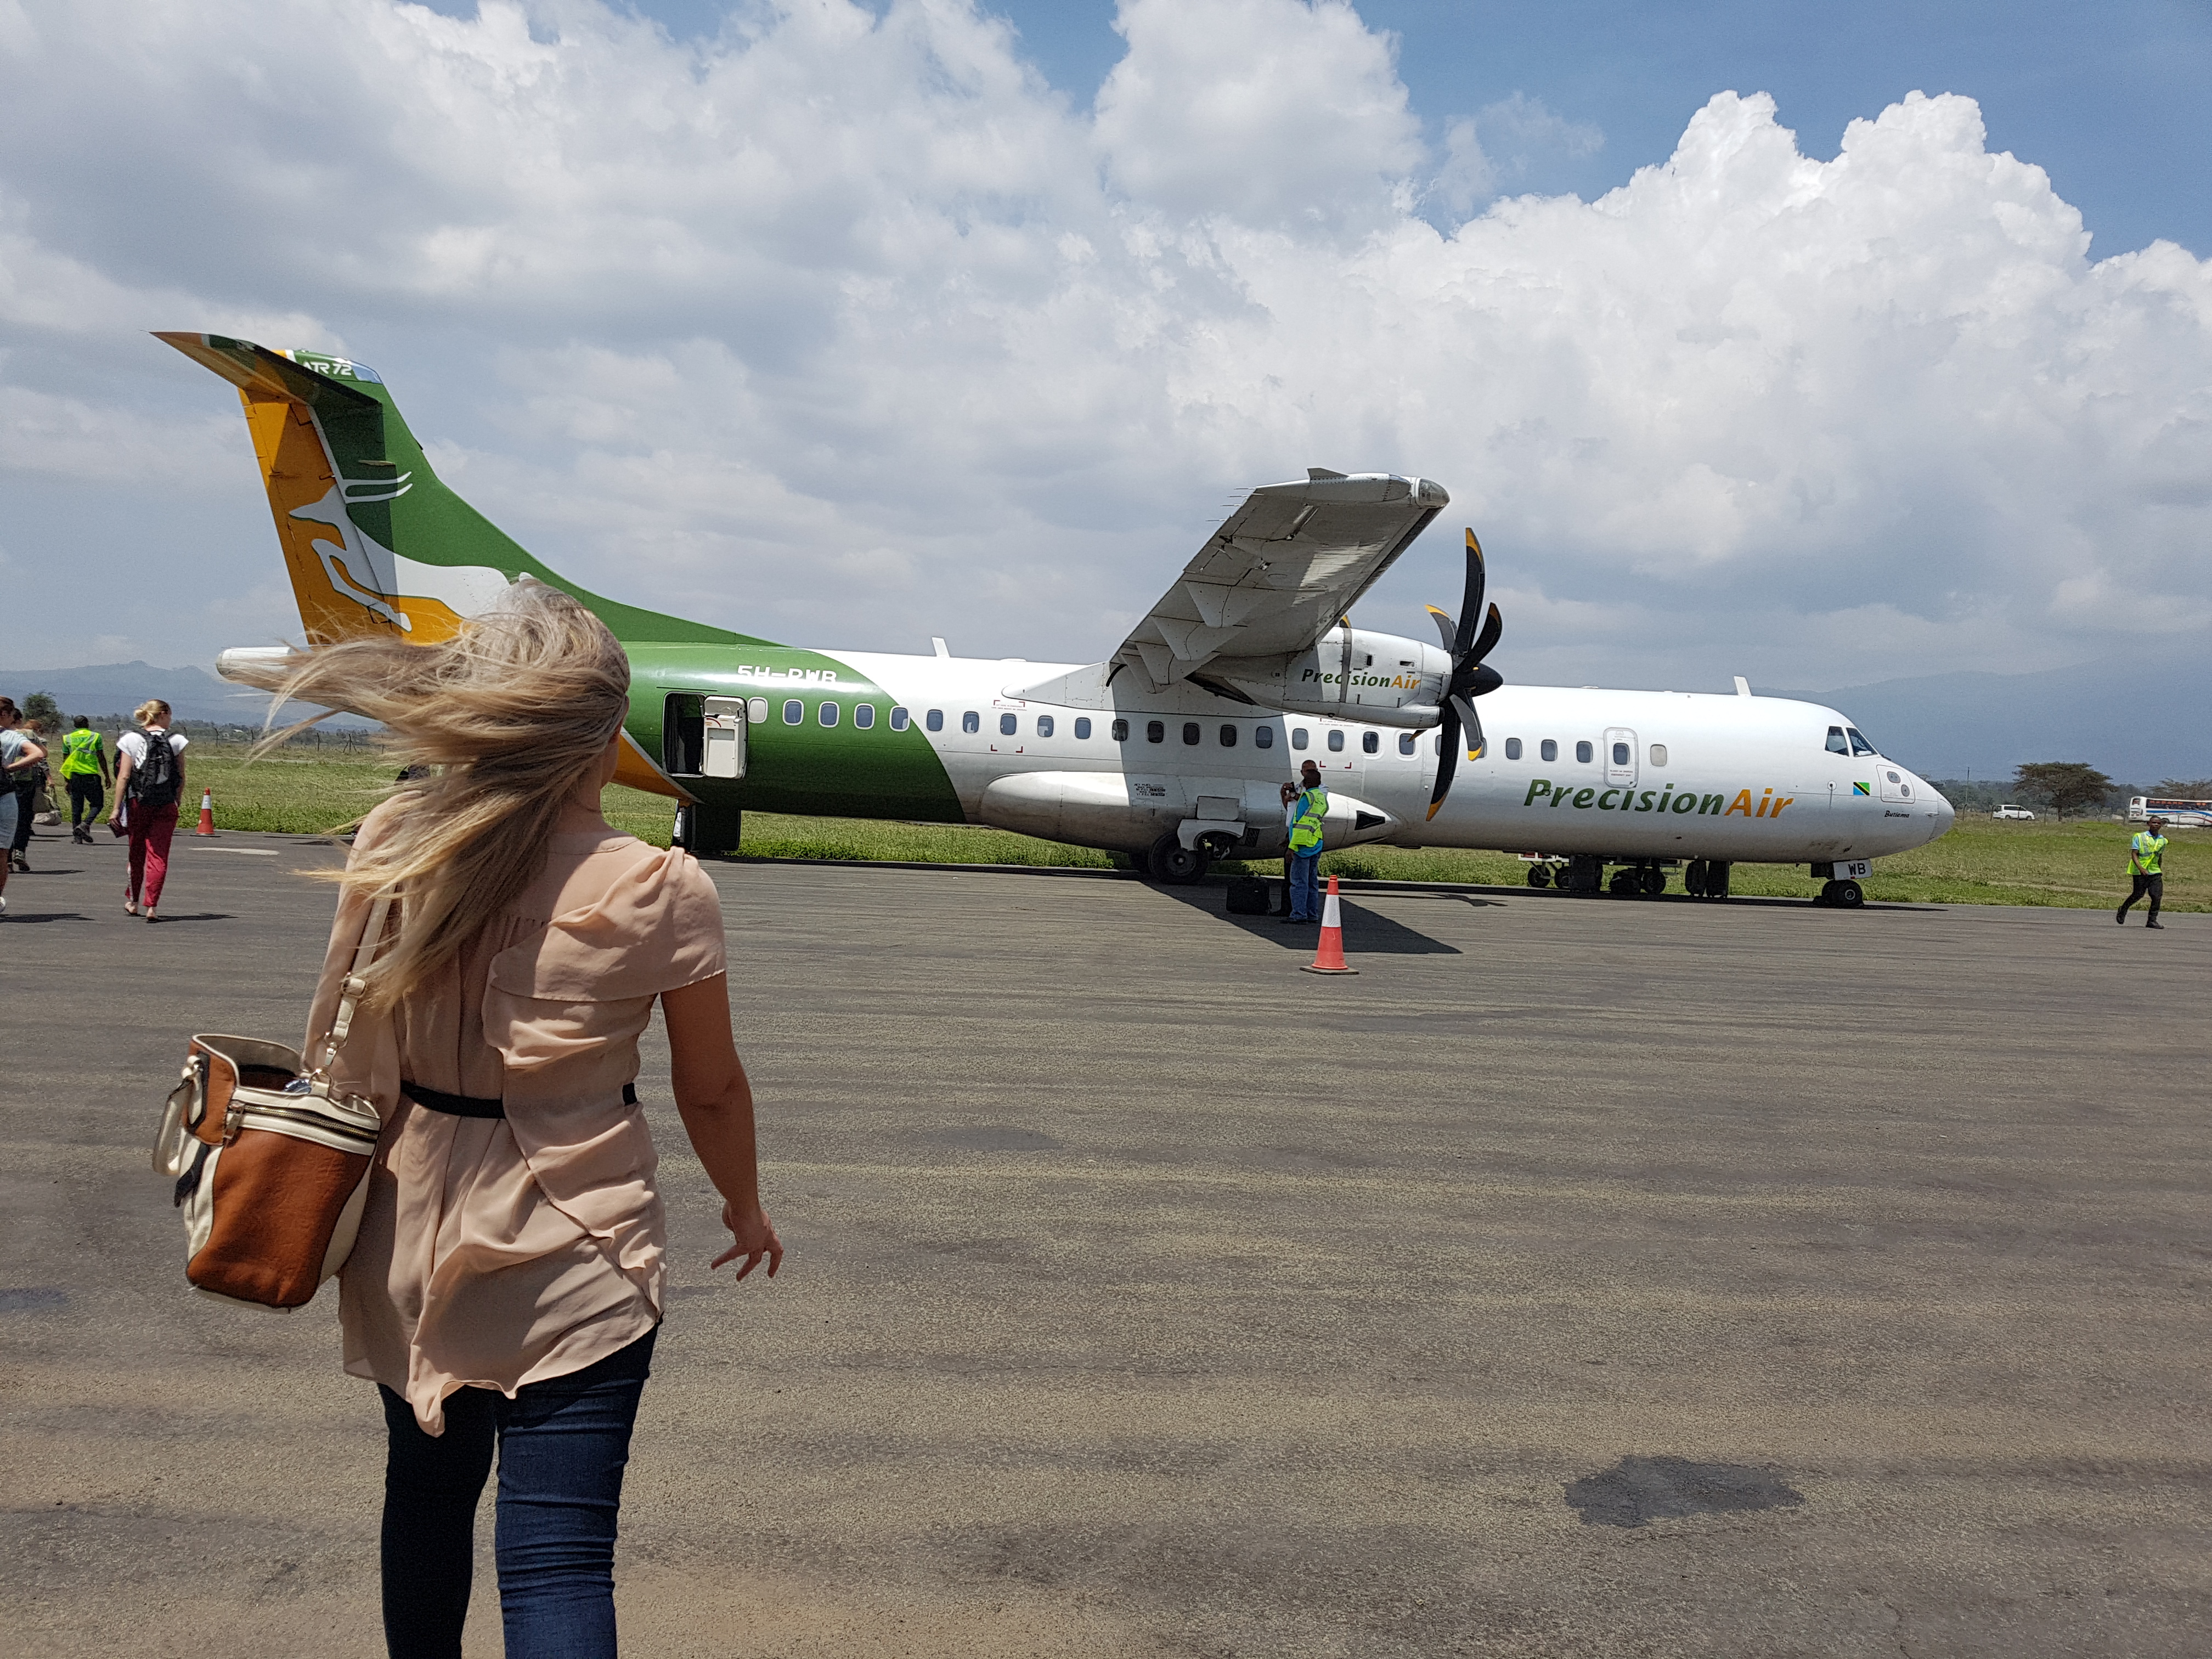 Precision Air plane in Arusha